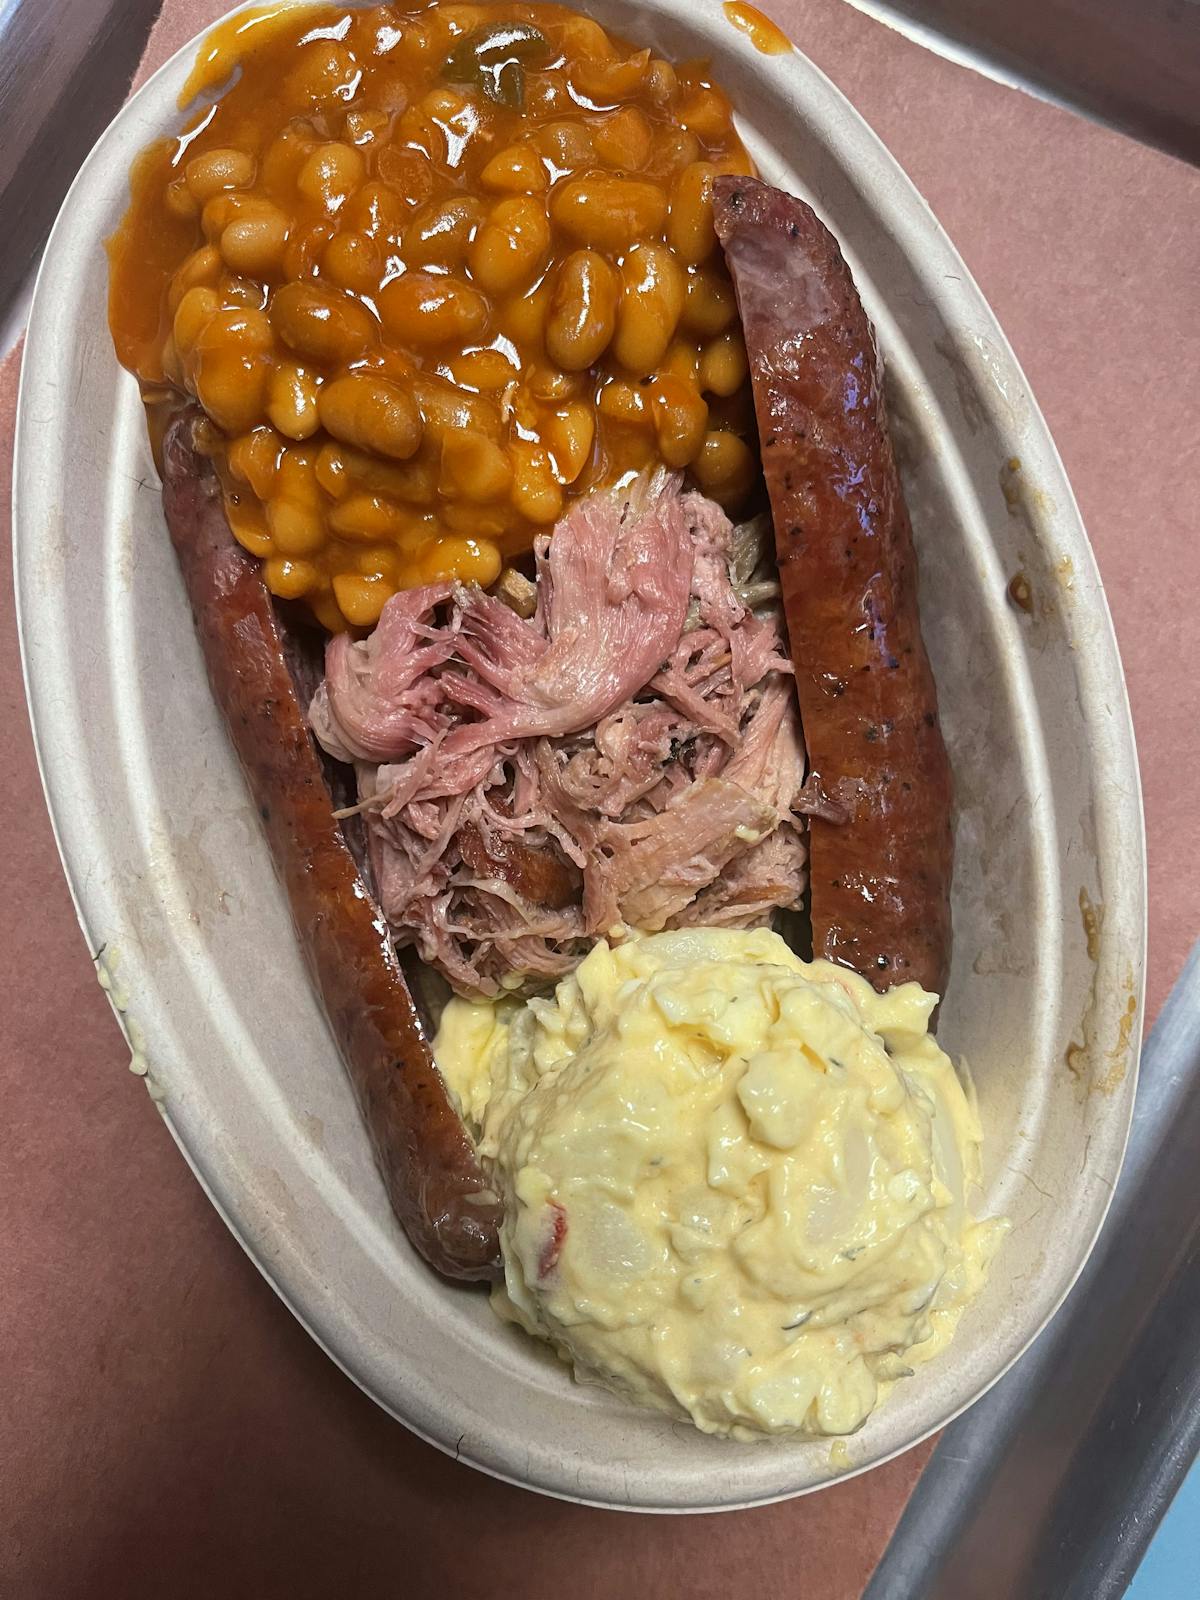 barbeque boat, pork, potato salad, beans and sausage